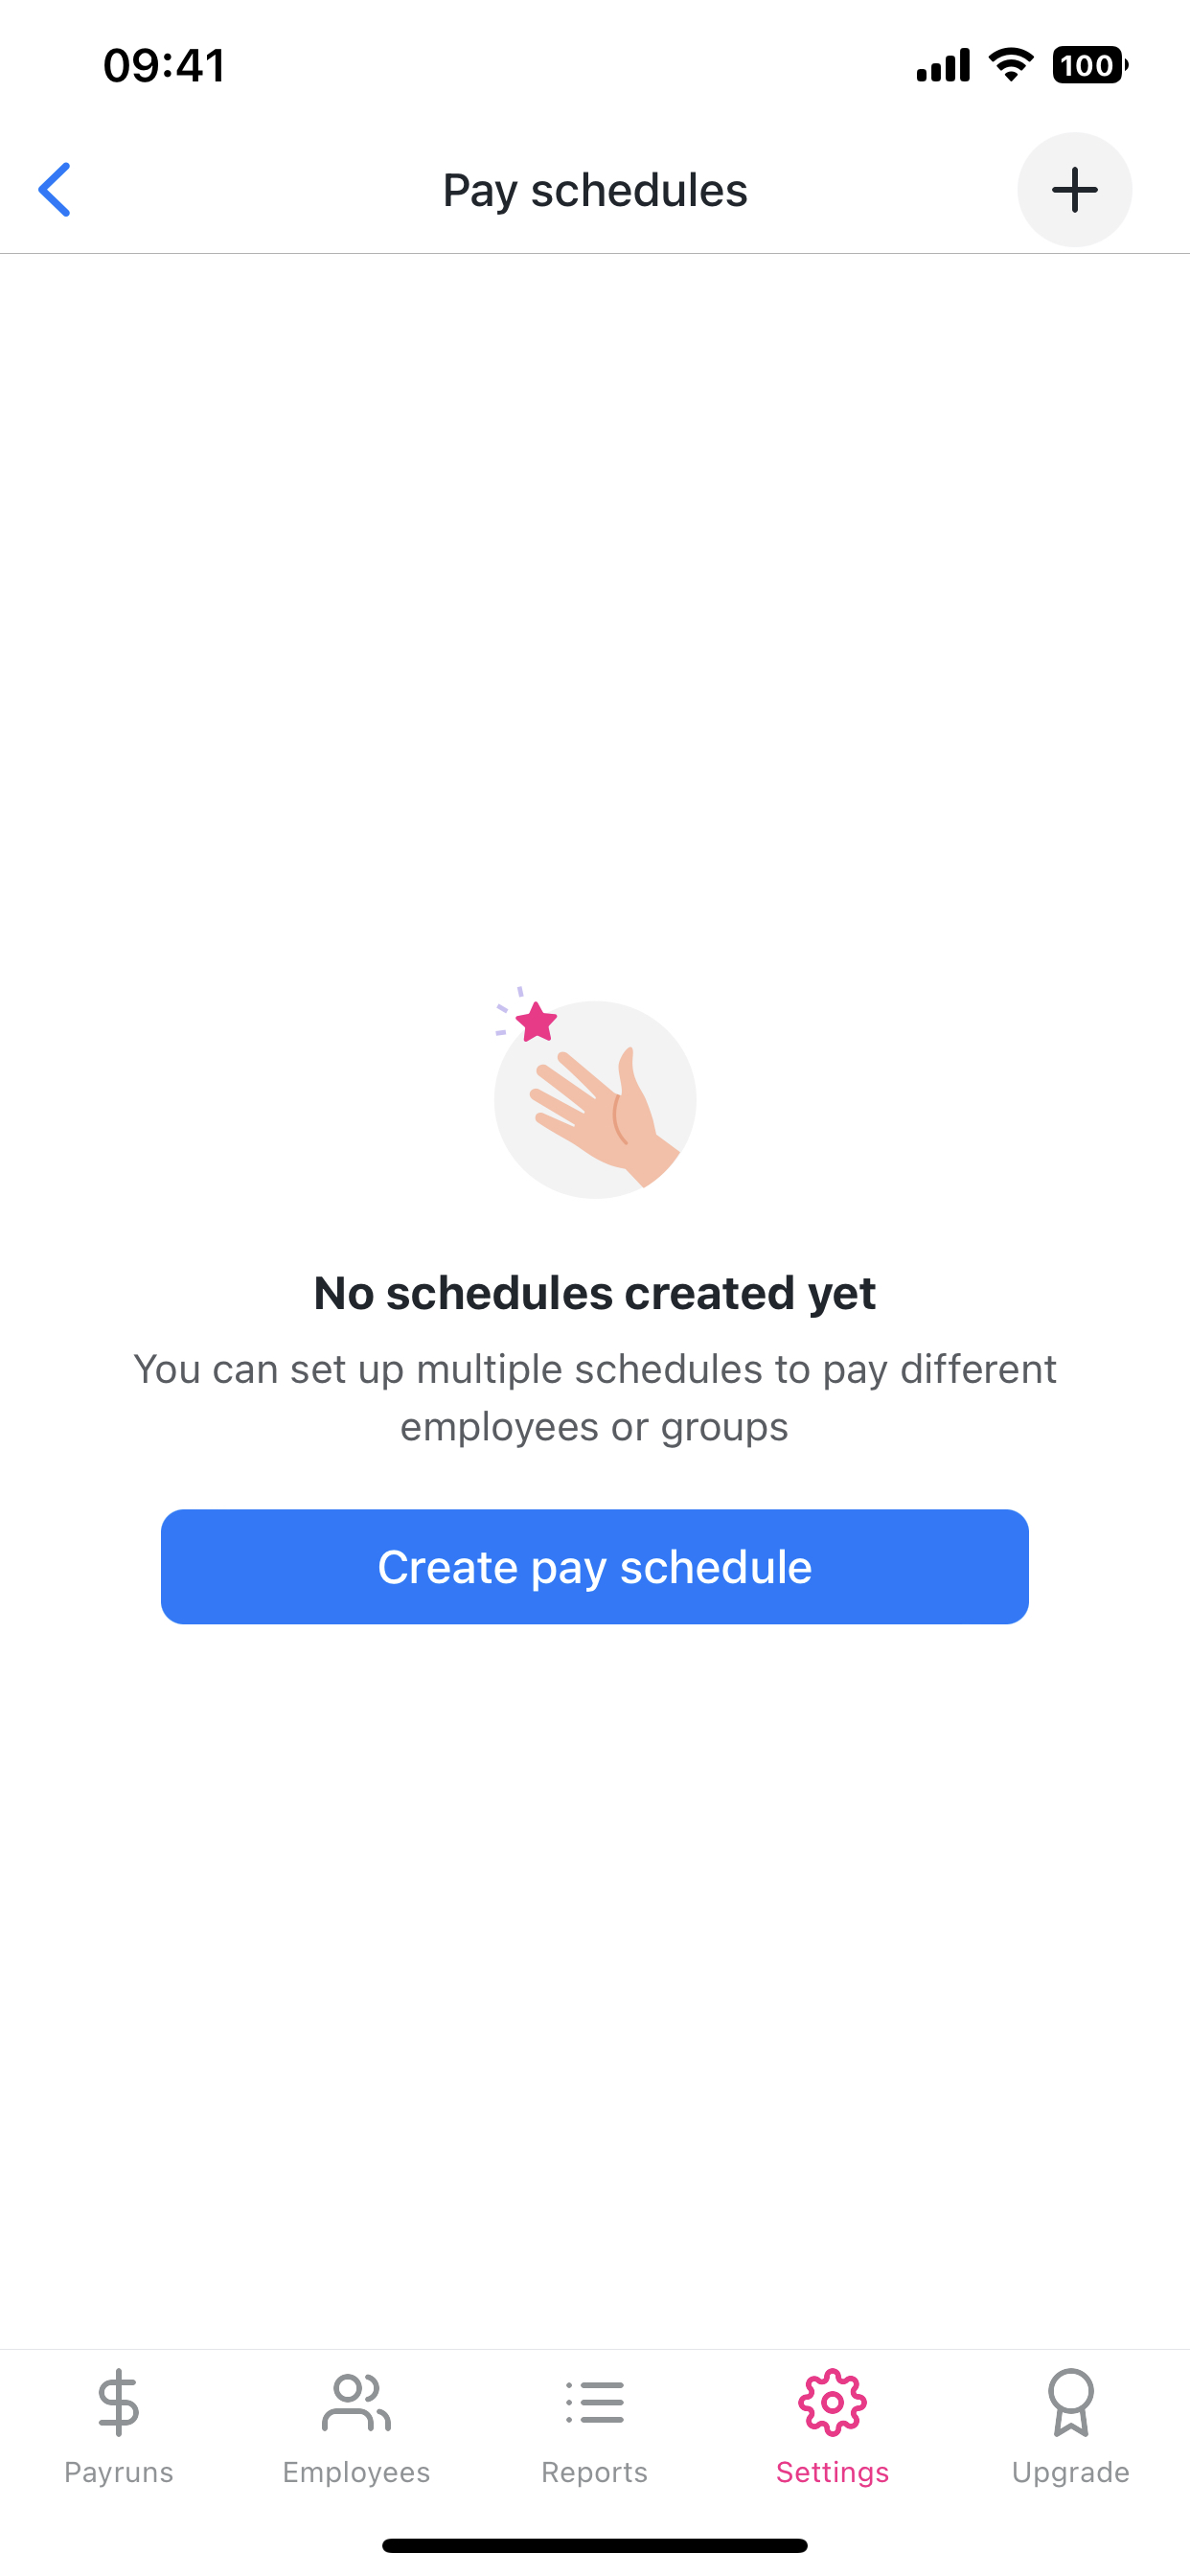 Pay schedule - empty 